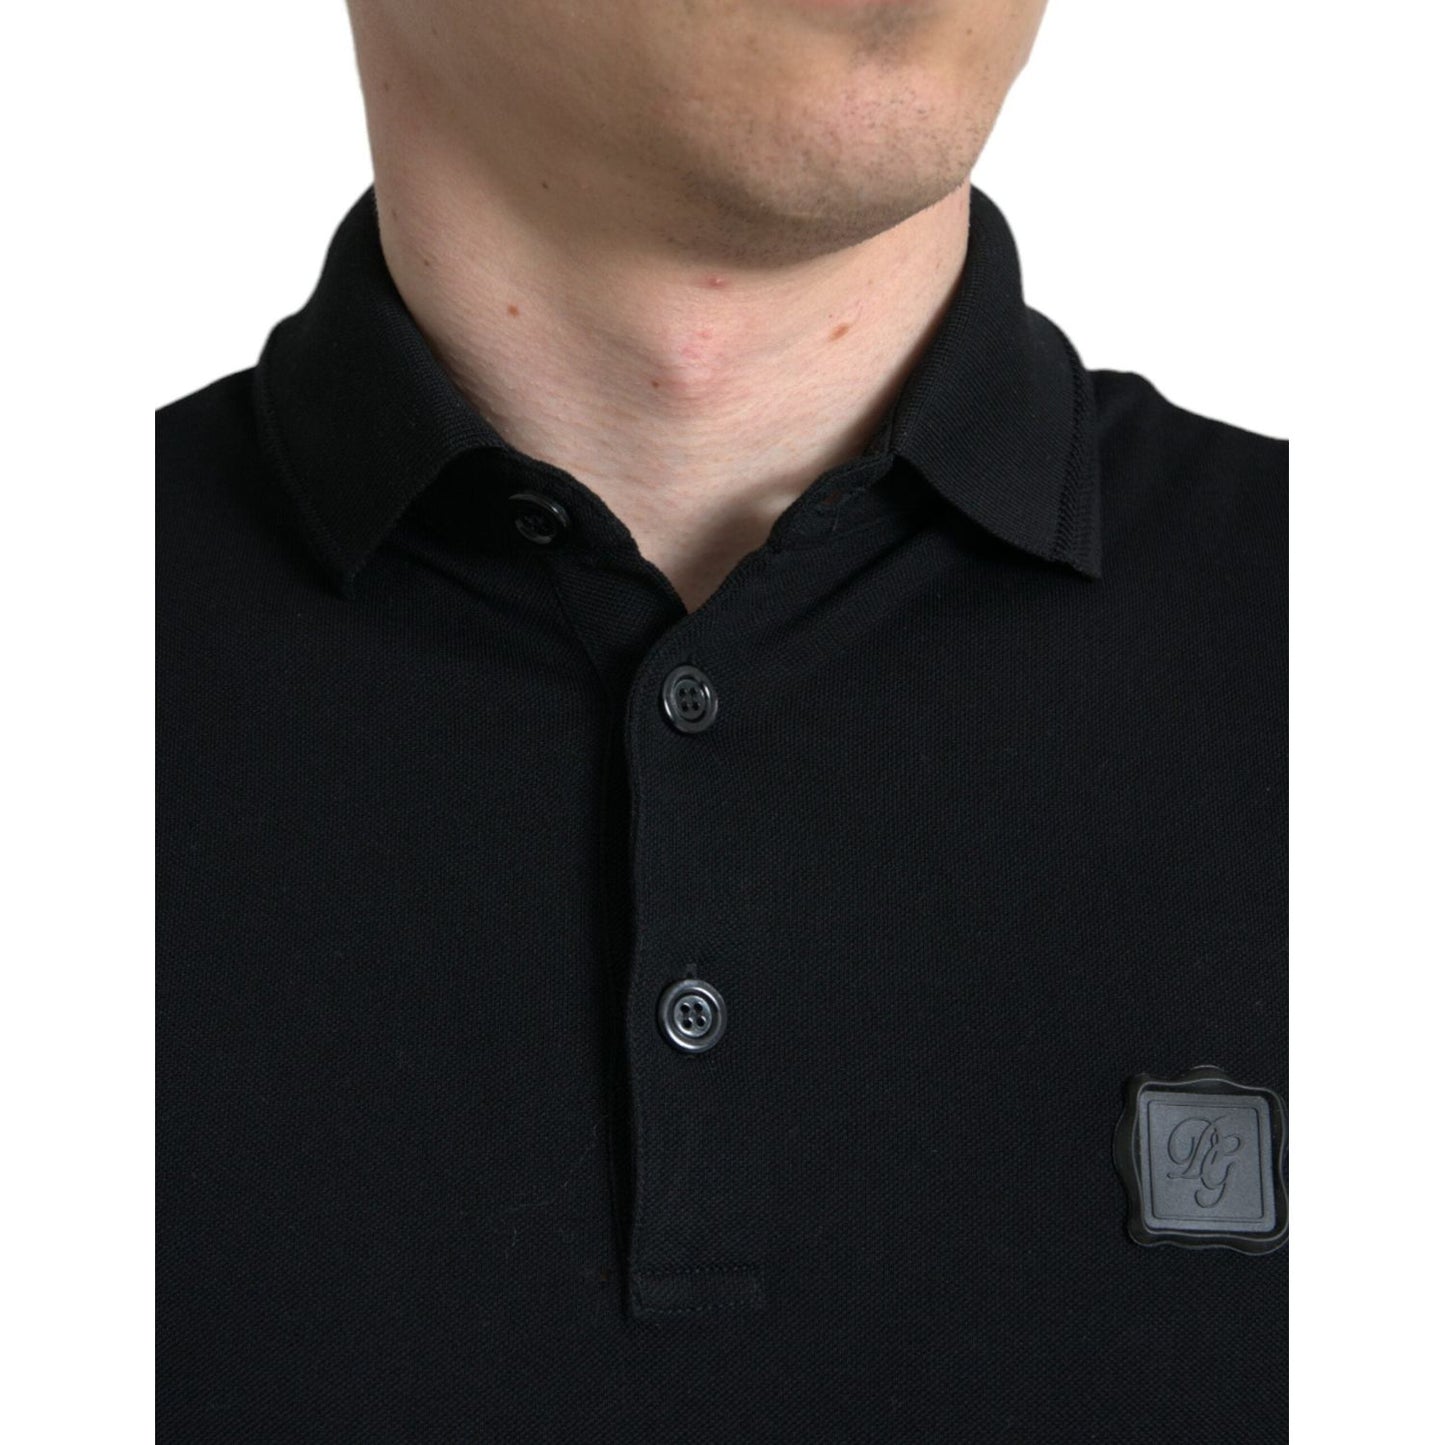 Dolce & Gabbana Elegant Black Cotton Polo Shirt elegant-black-cotton-polo-shirt